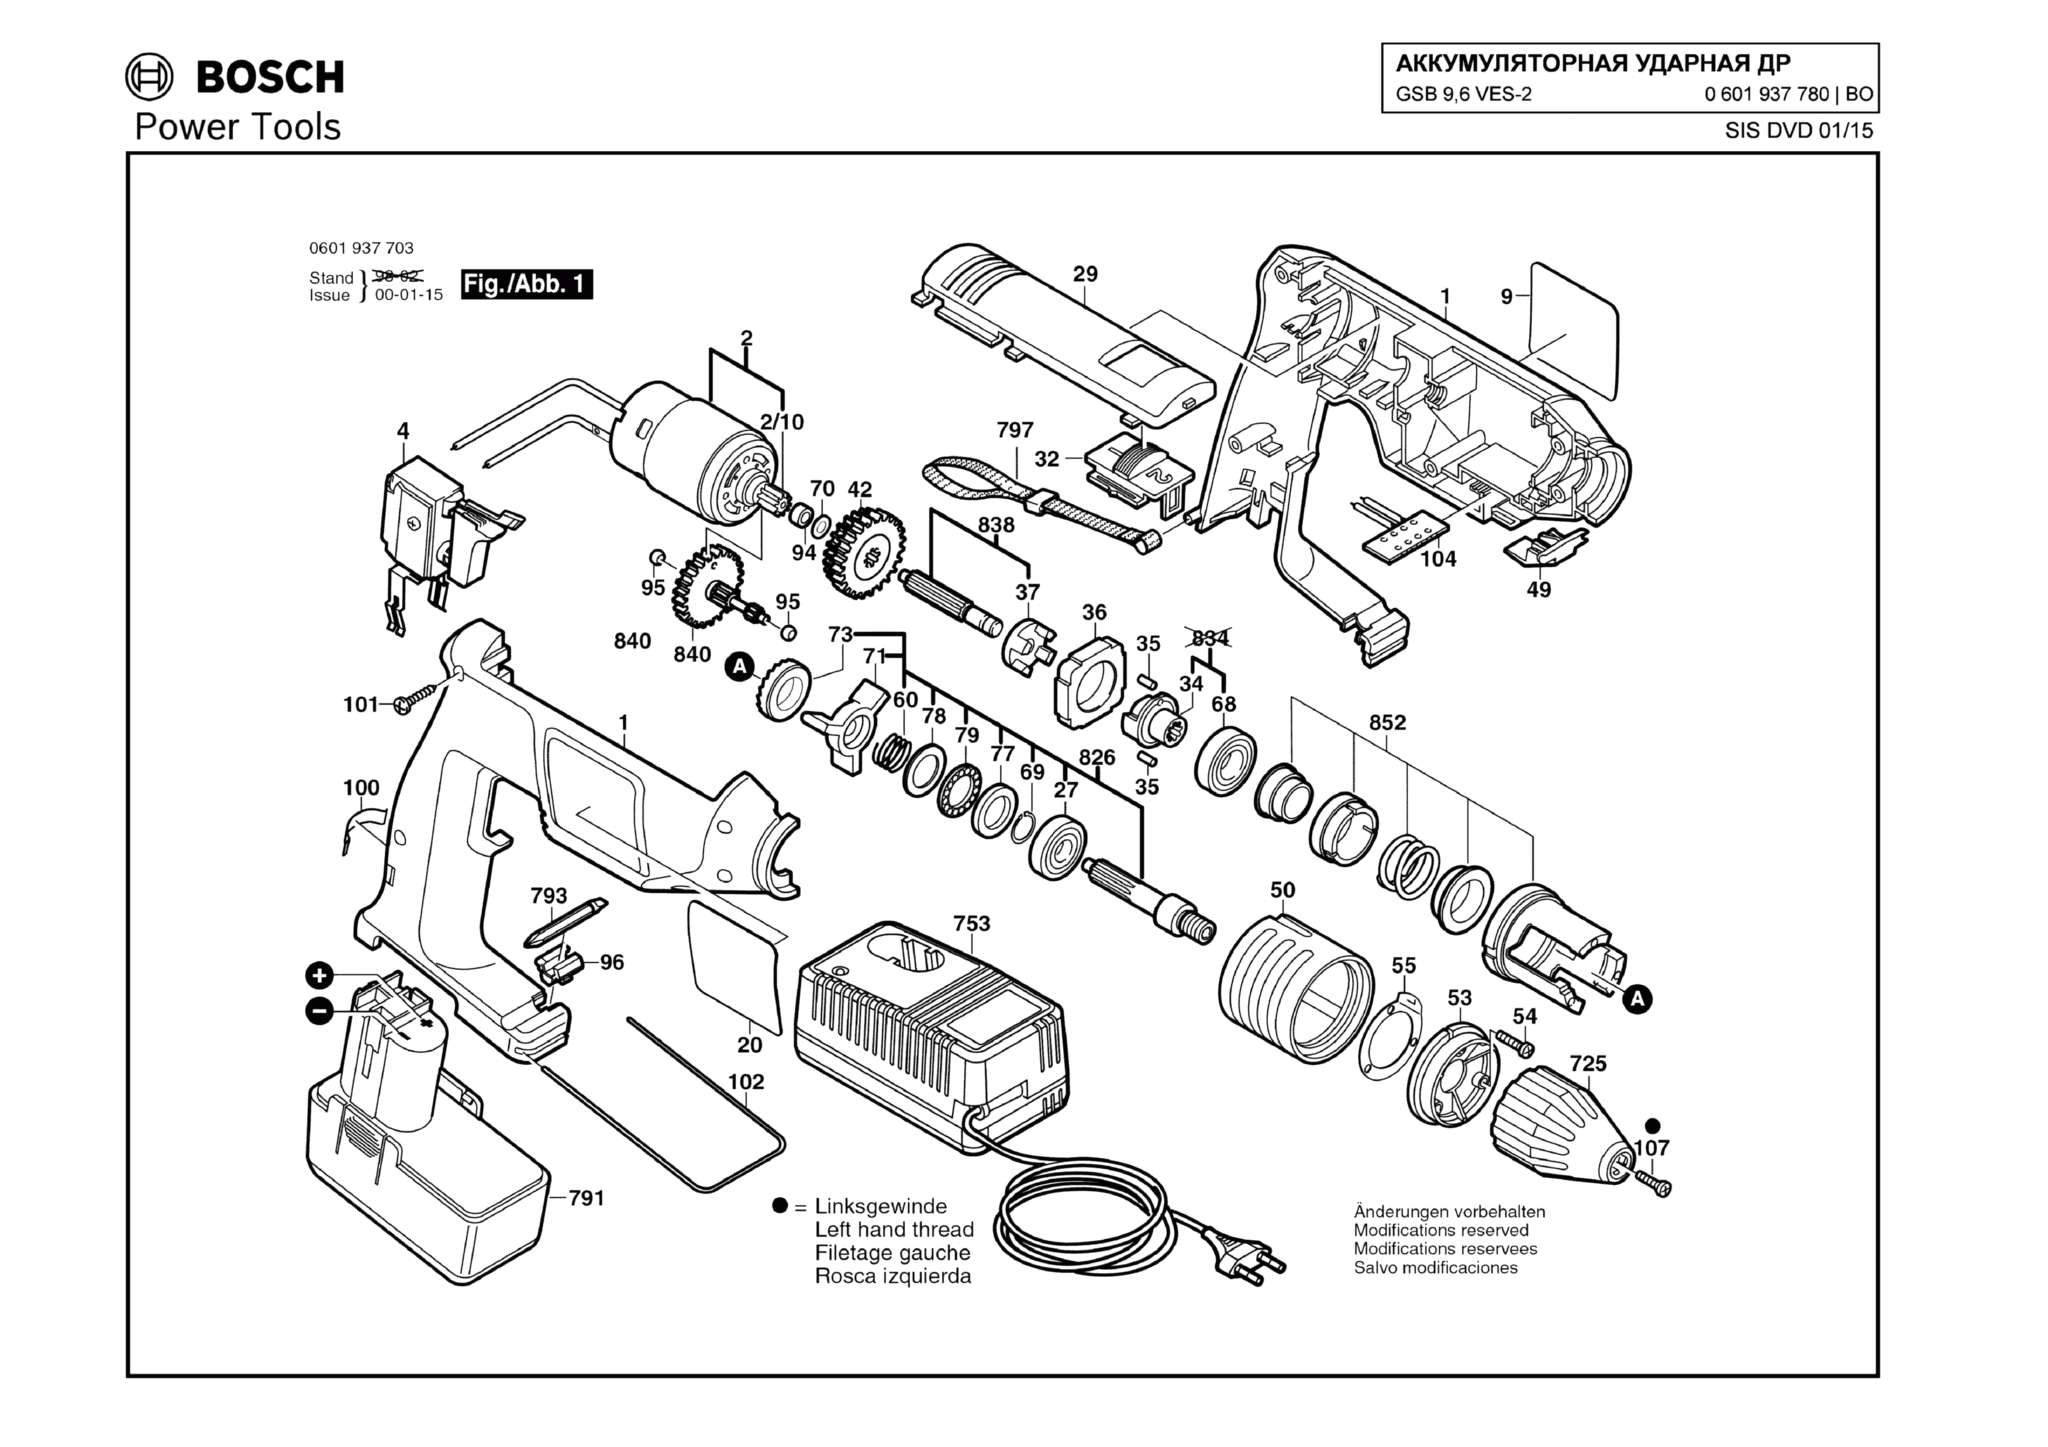 Запчасти, схема и деталировка Bosch GSB 9,6 VES-2 (ТИП 0601937780)